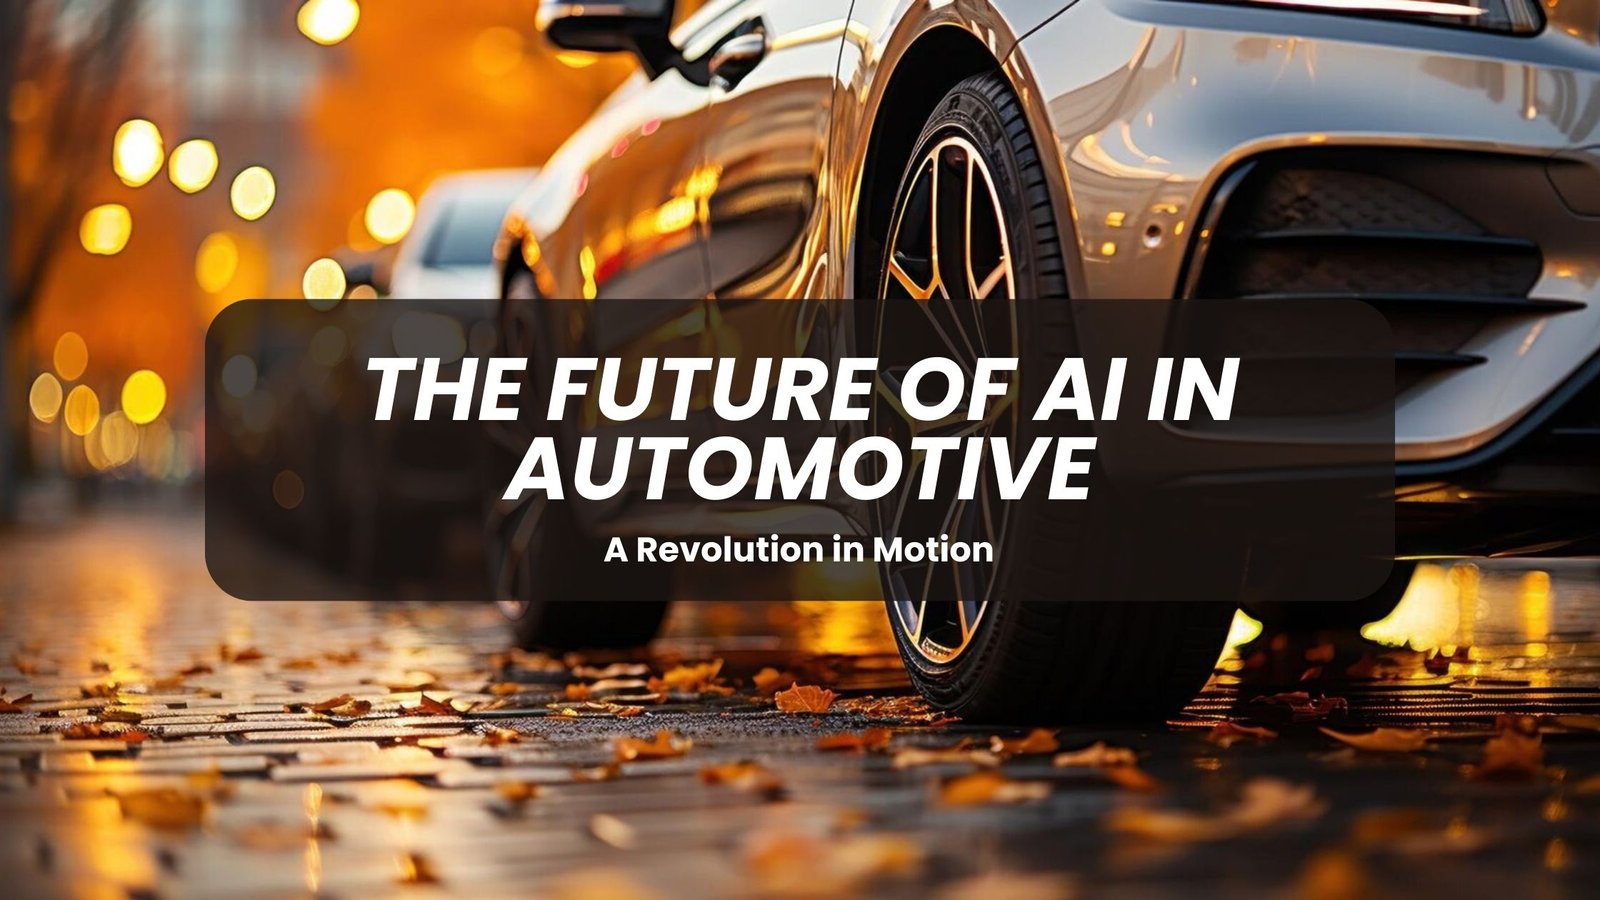 The future of AI in Automotive